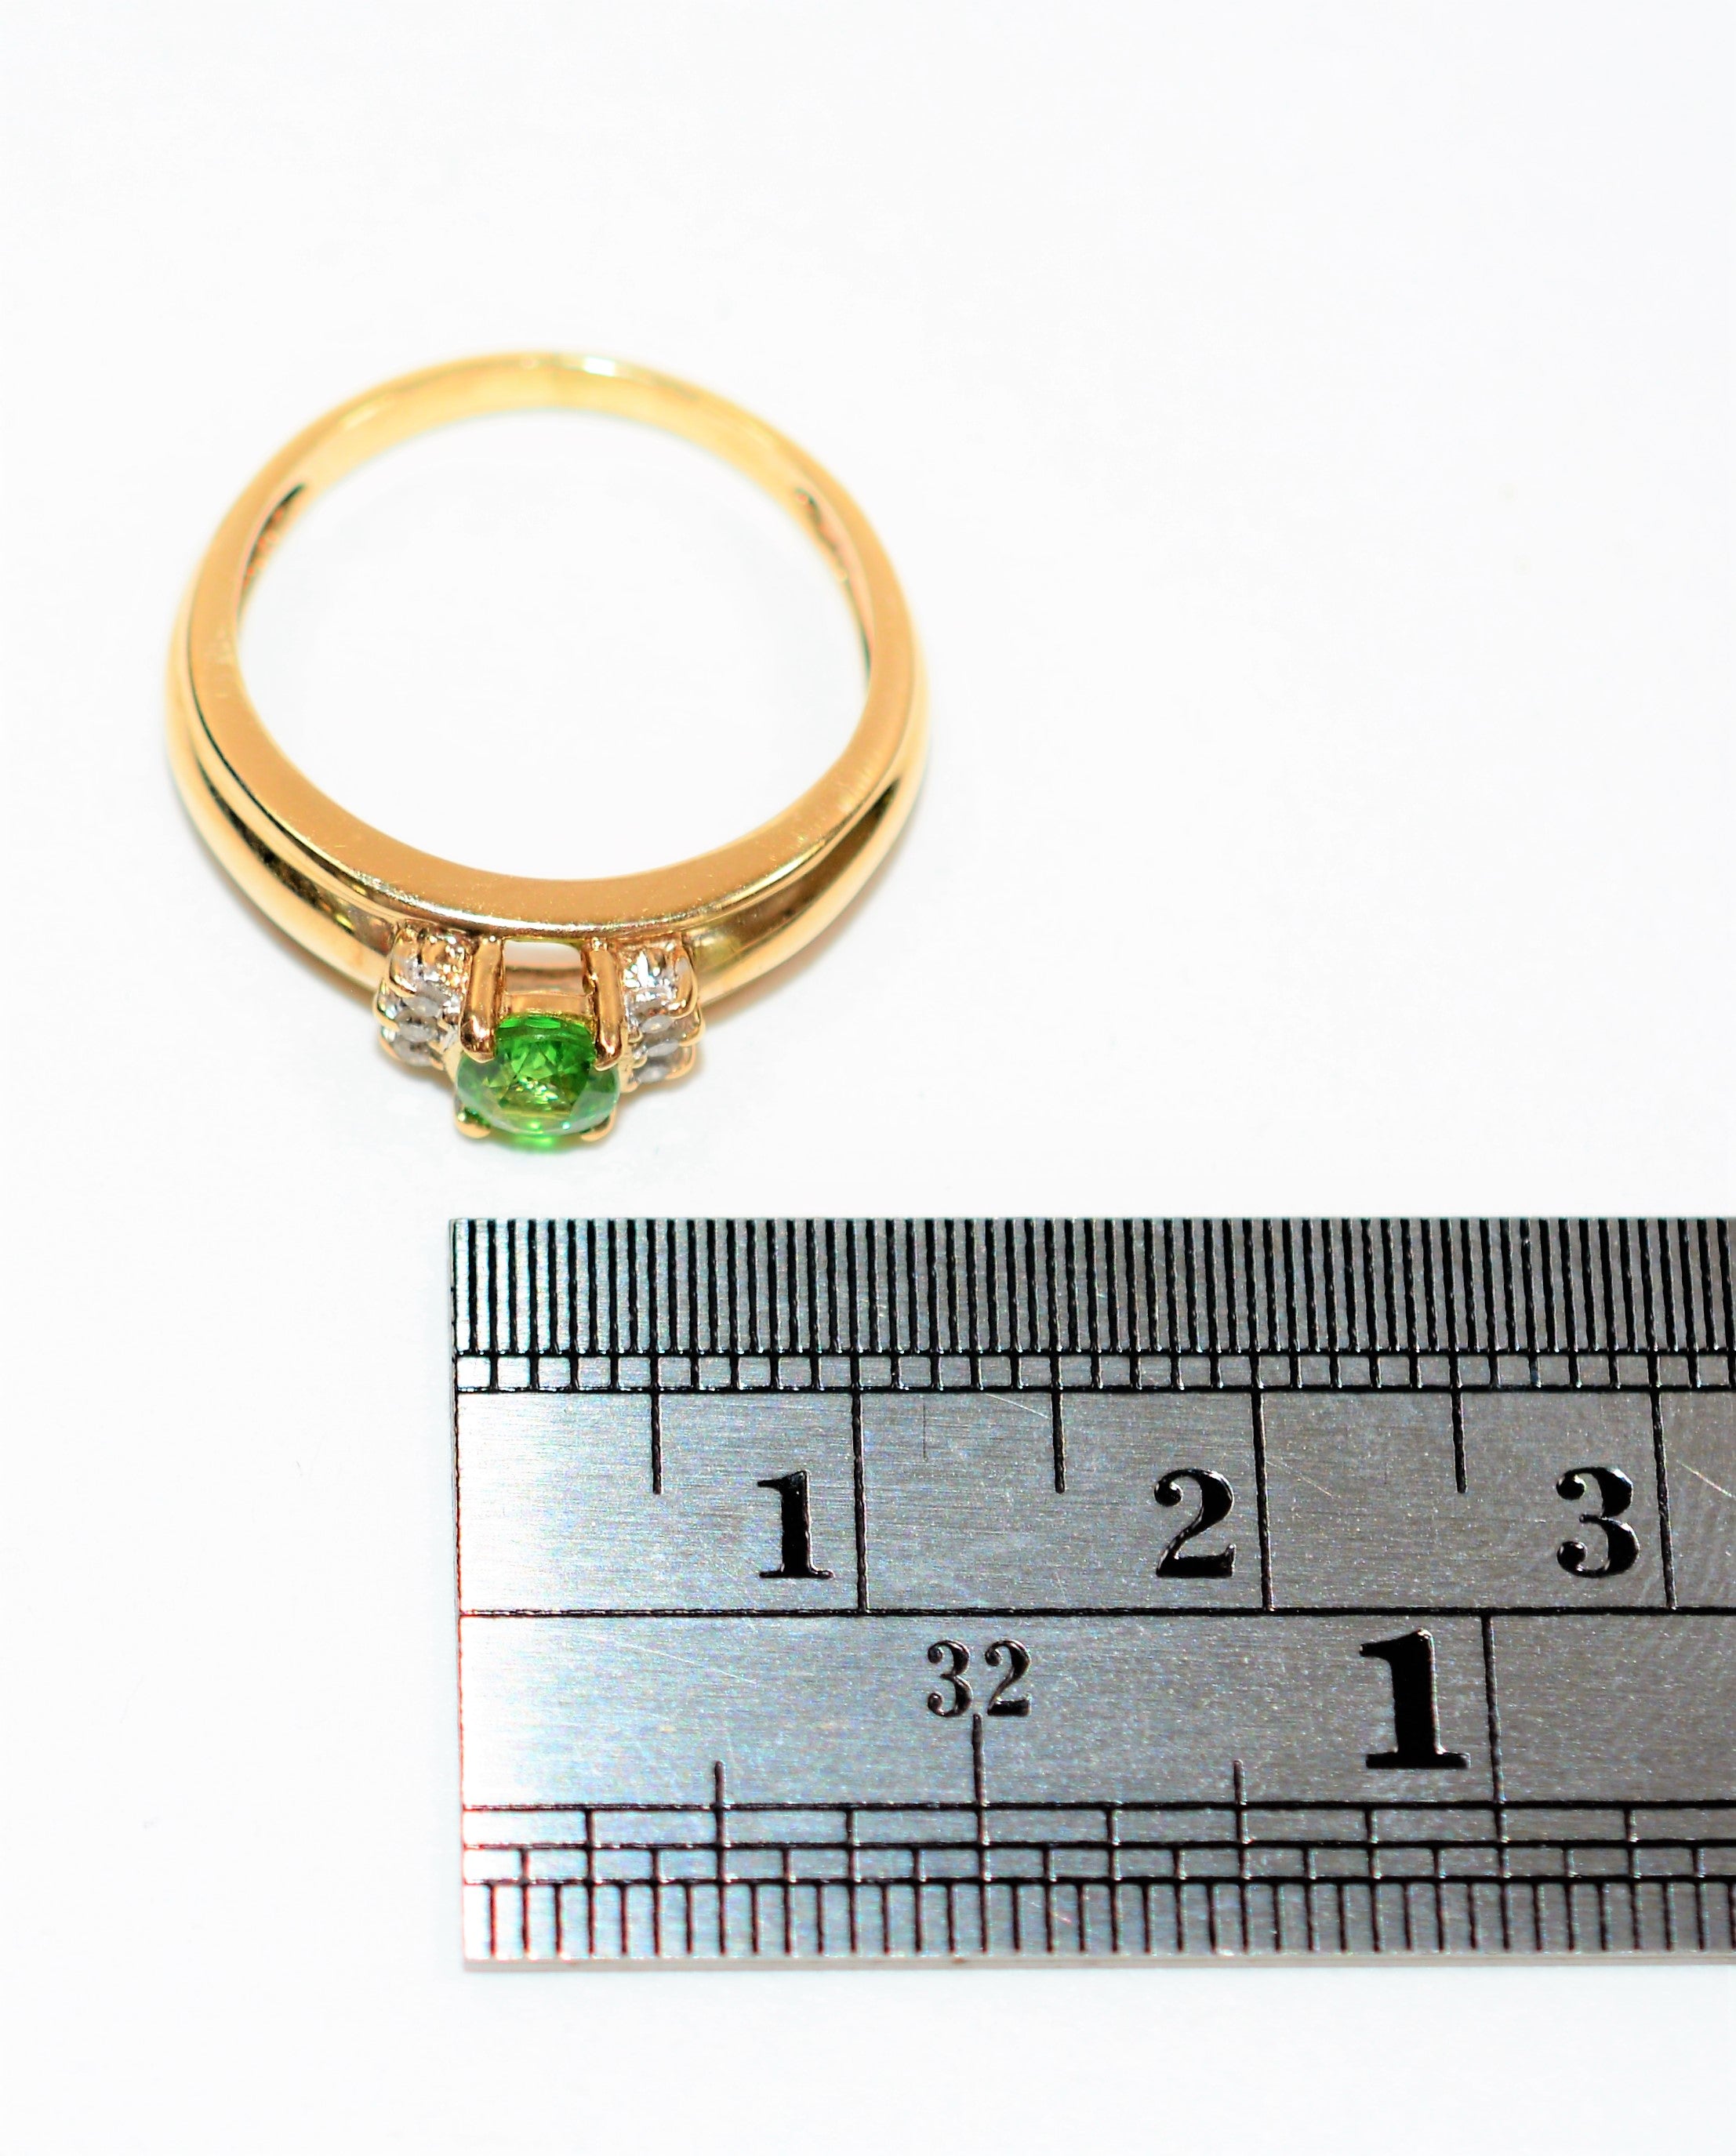 Natural Tsavorite Garnet & Diamond Ring 10K Solid Gold .52tcw Gemstone Ring Green Ring January Birthstone Ring Garnet Ring Fine Women's Ring